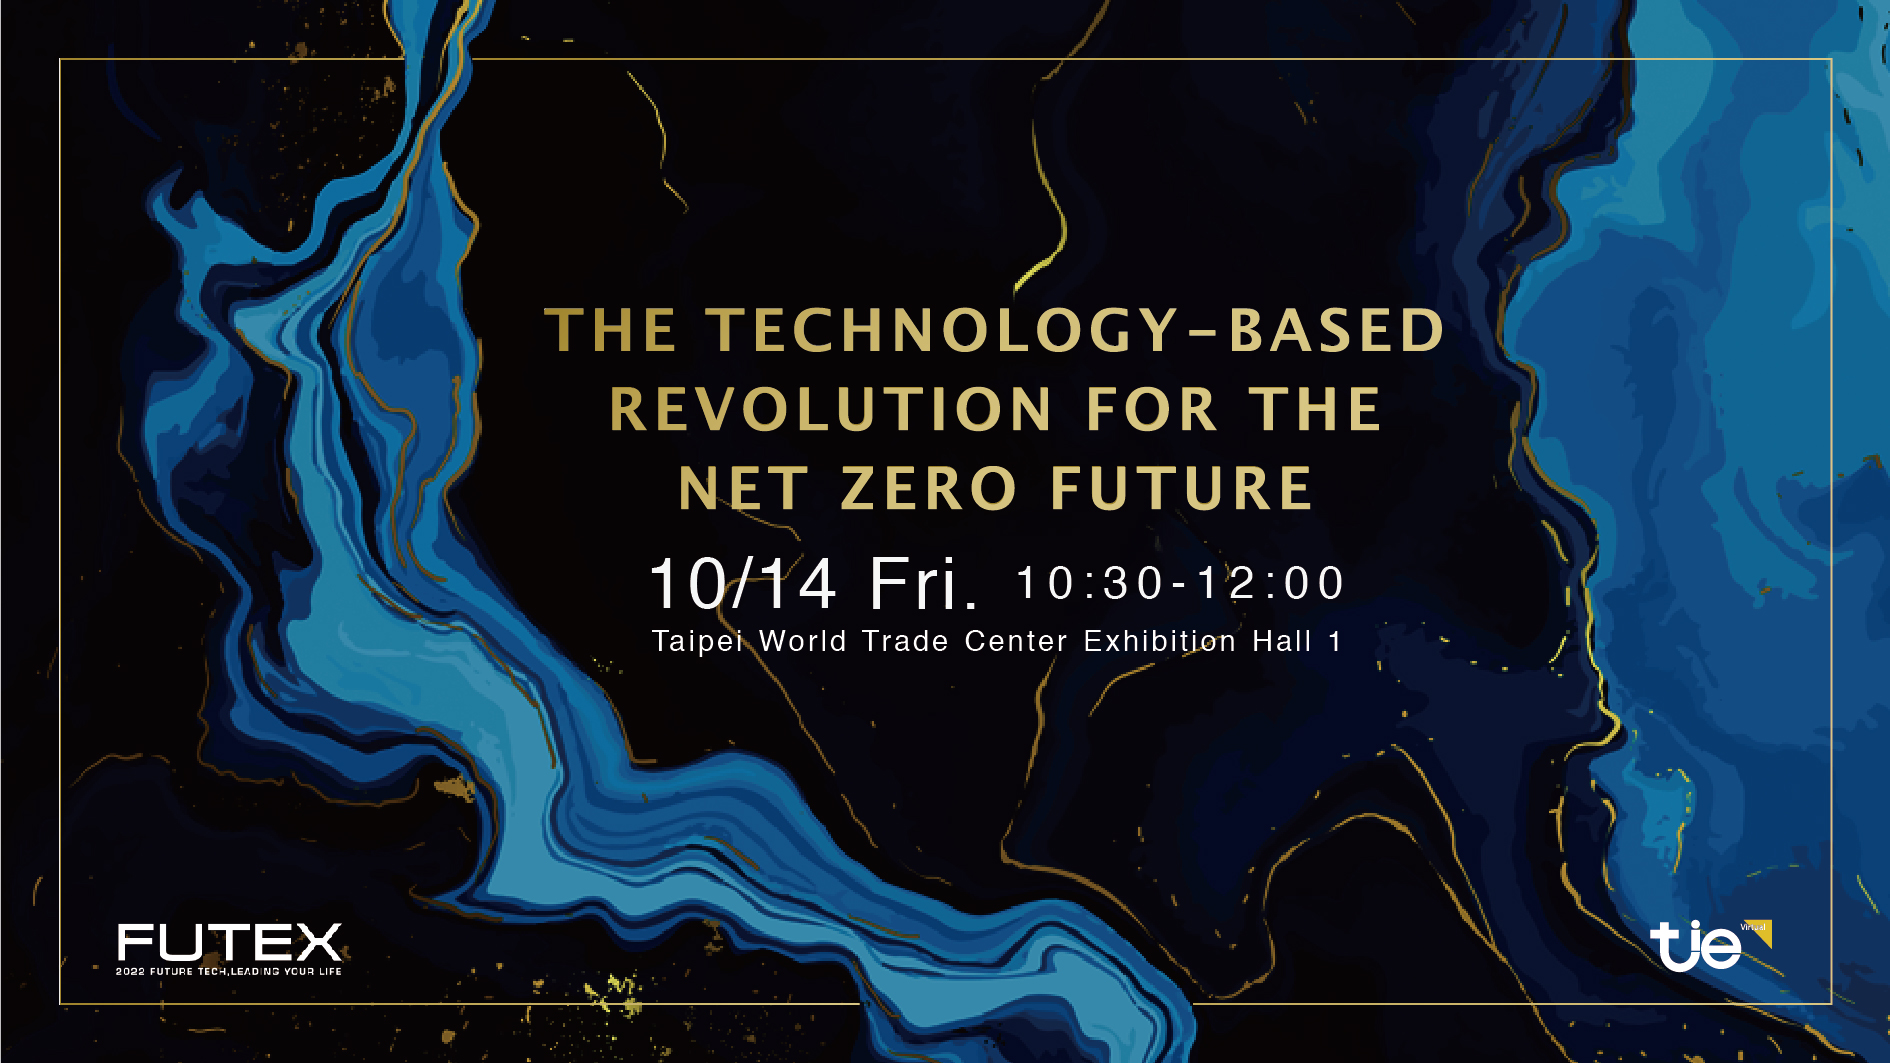 The Technology-based Revolution for the Net Zero Future